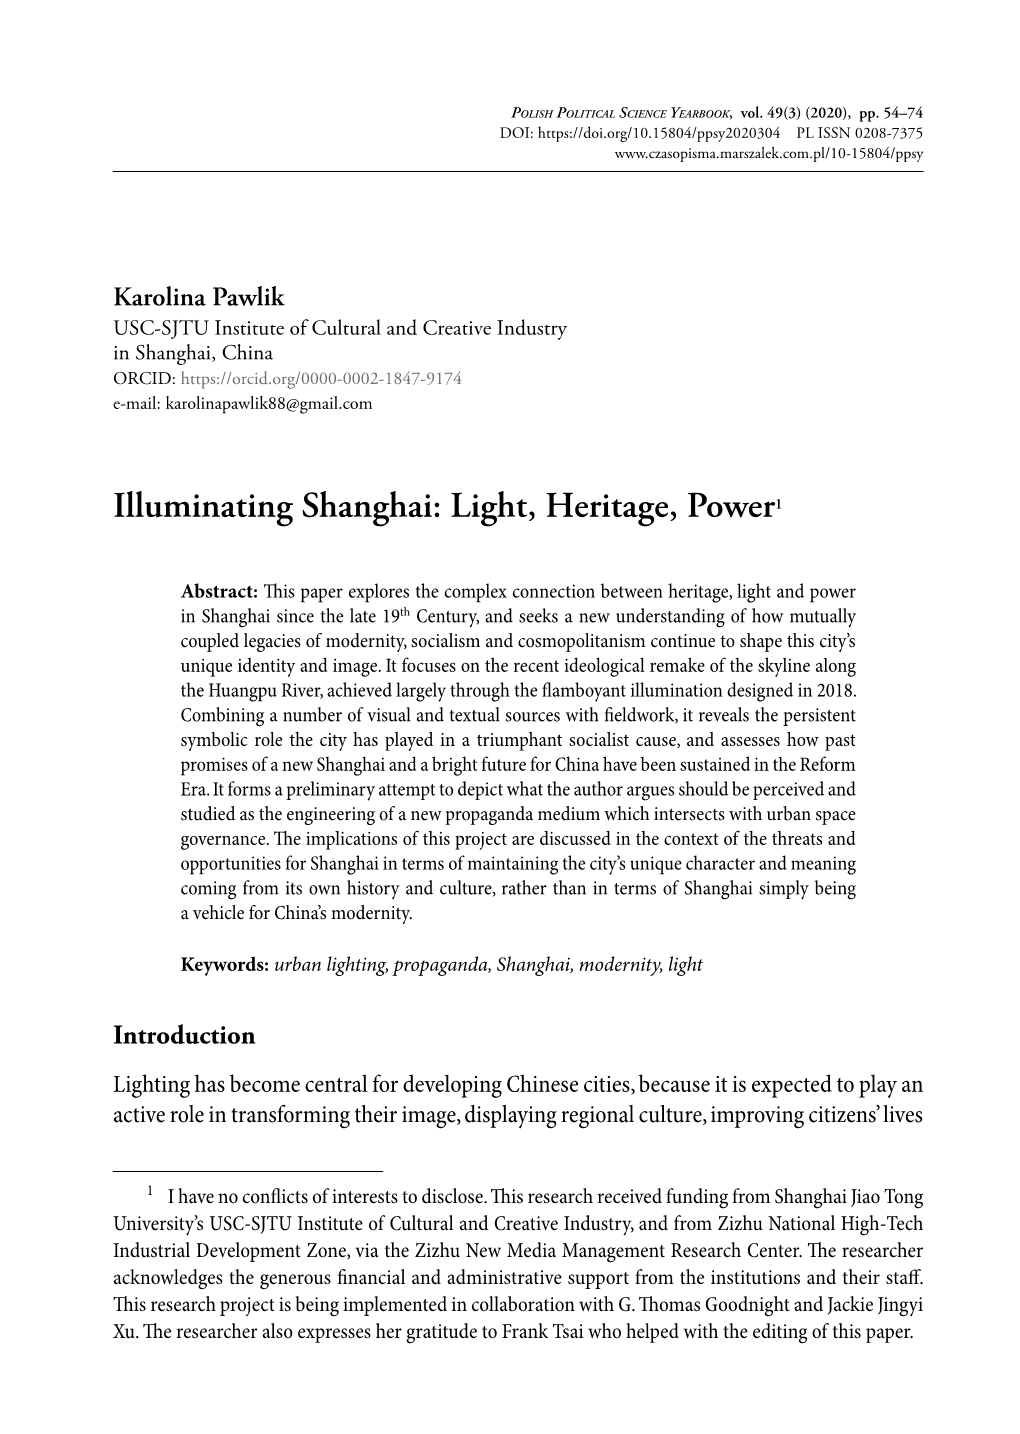 Illuminating Shanghai: Light, Heritage, Power1